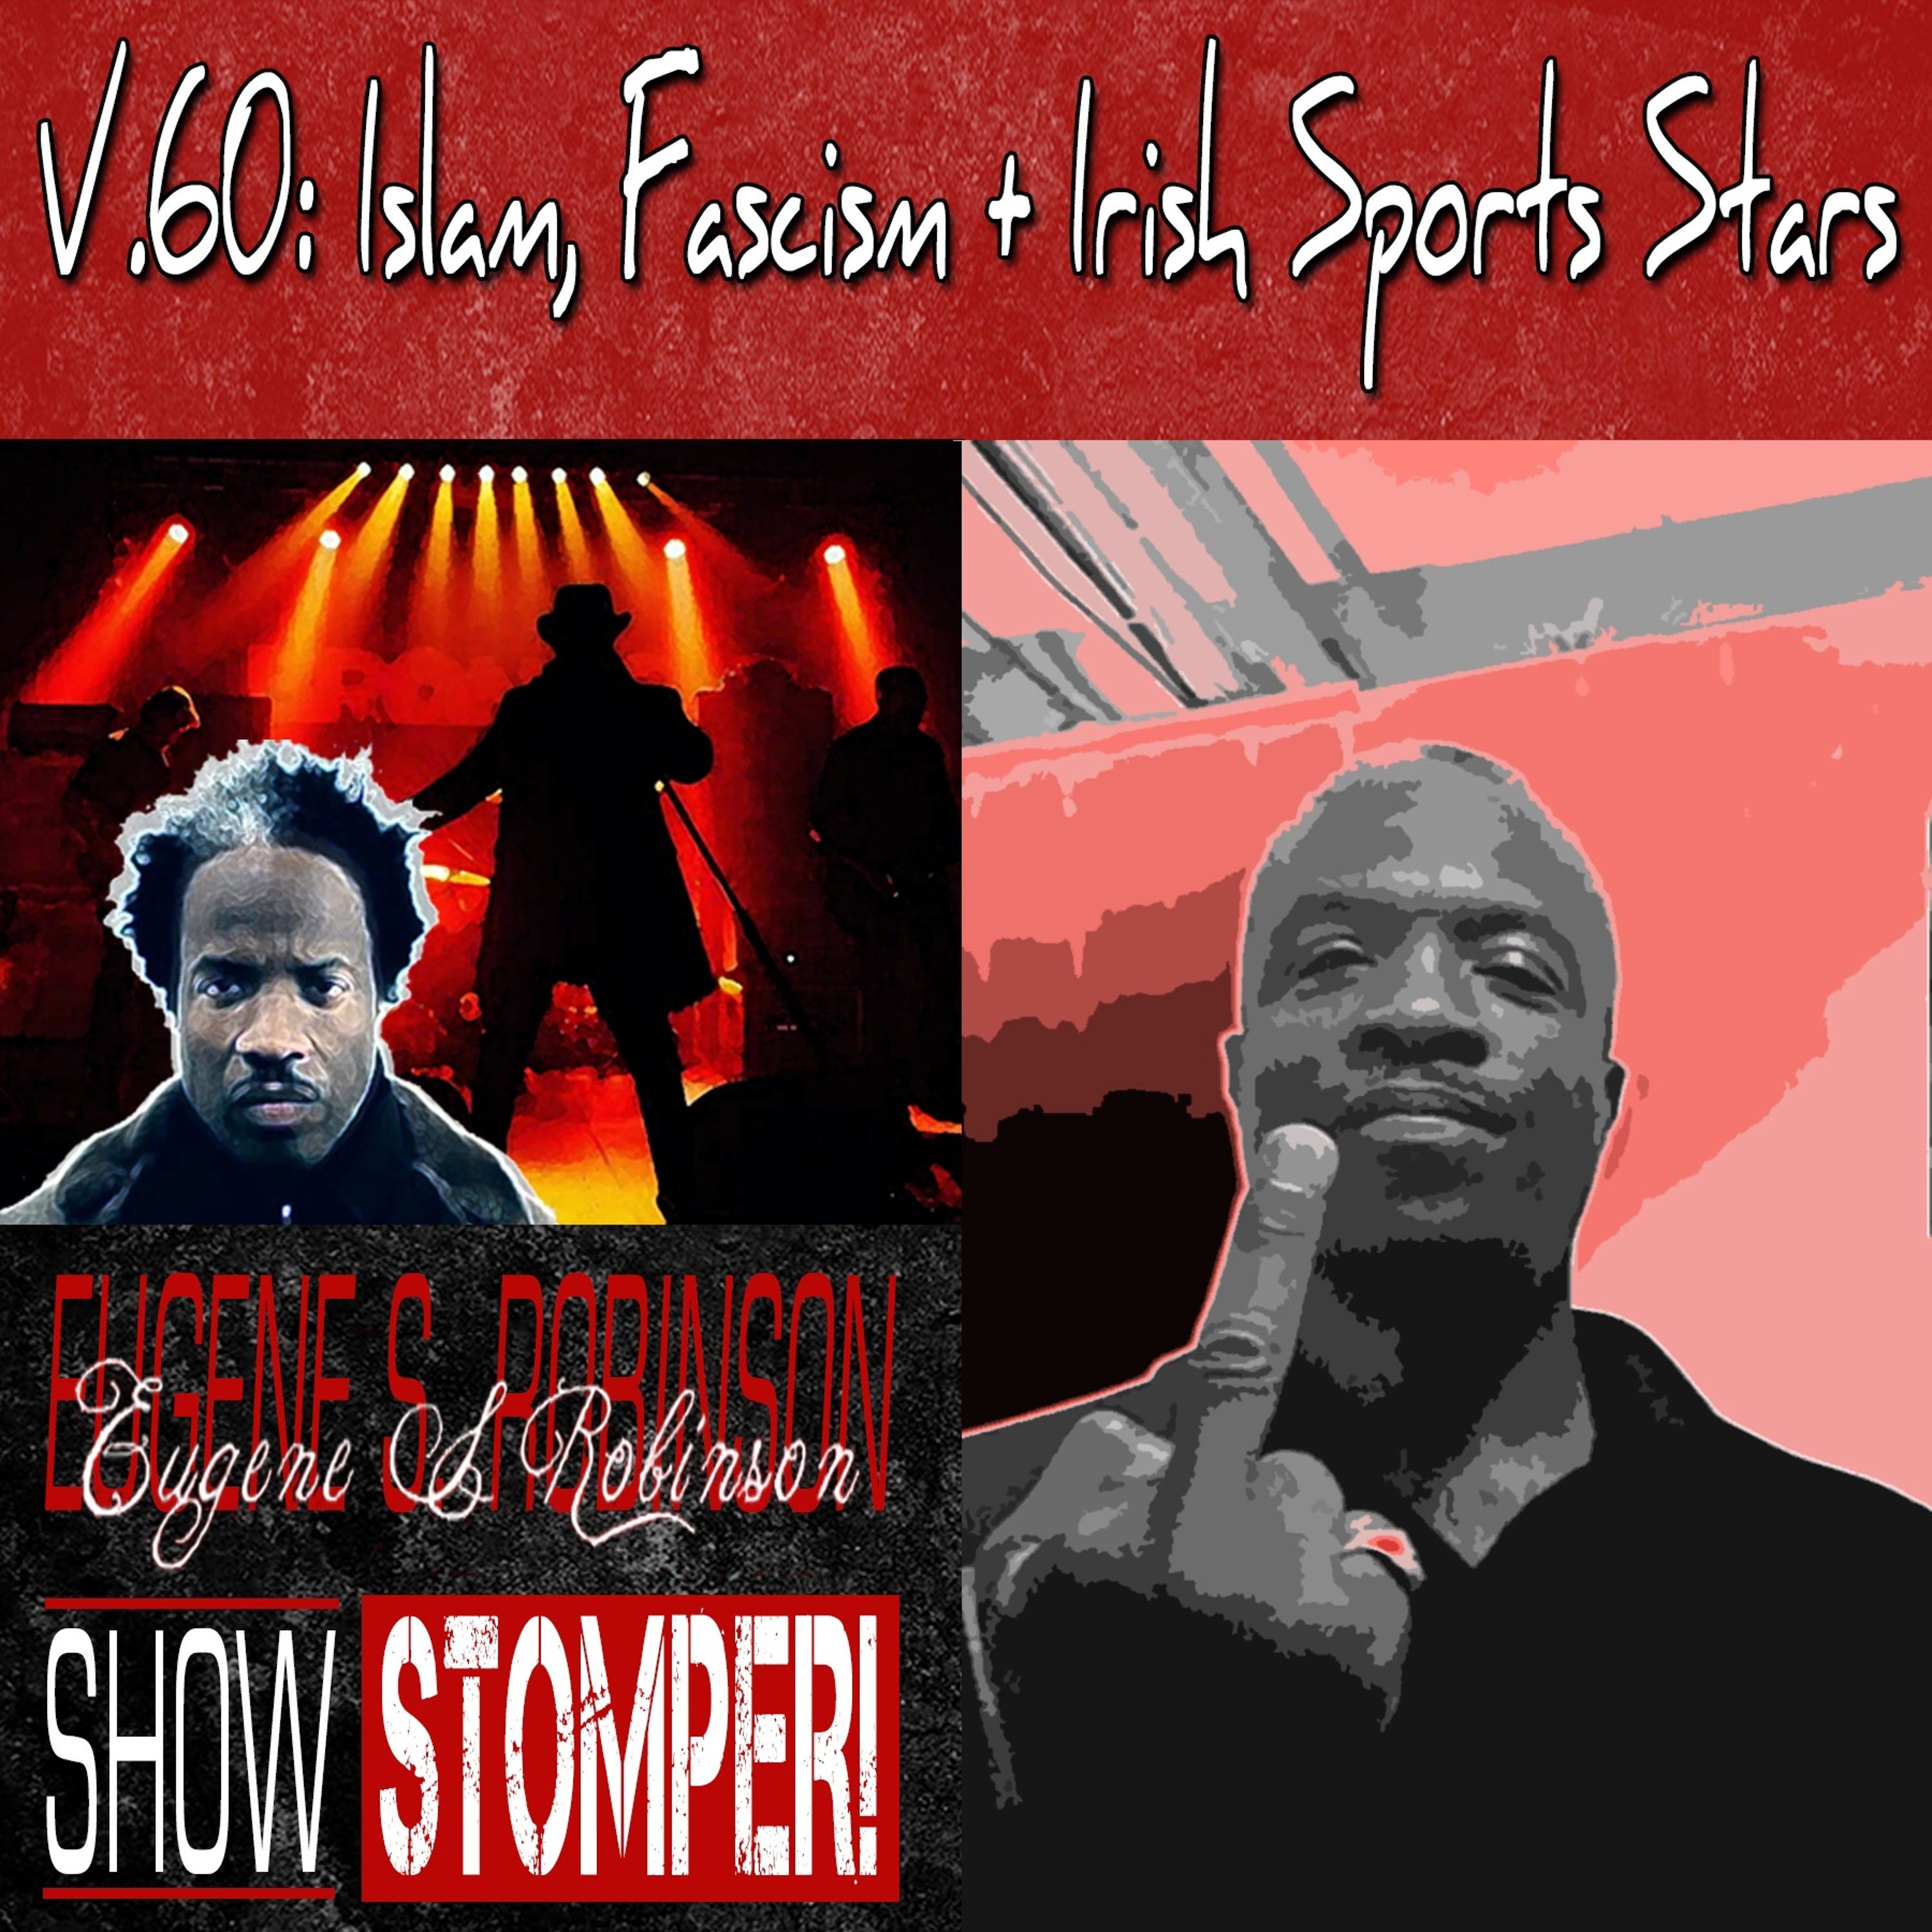 V.60 Islam, Fascism + Irish Sports Stars On The Eugene S. Robinson Show Stomper!